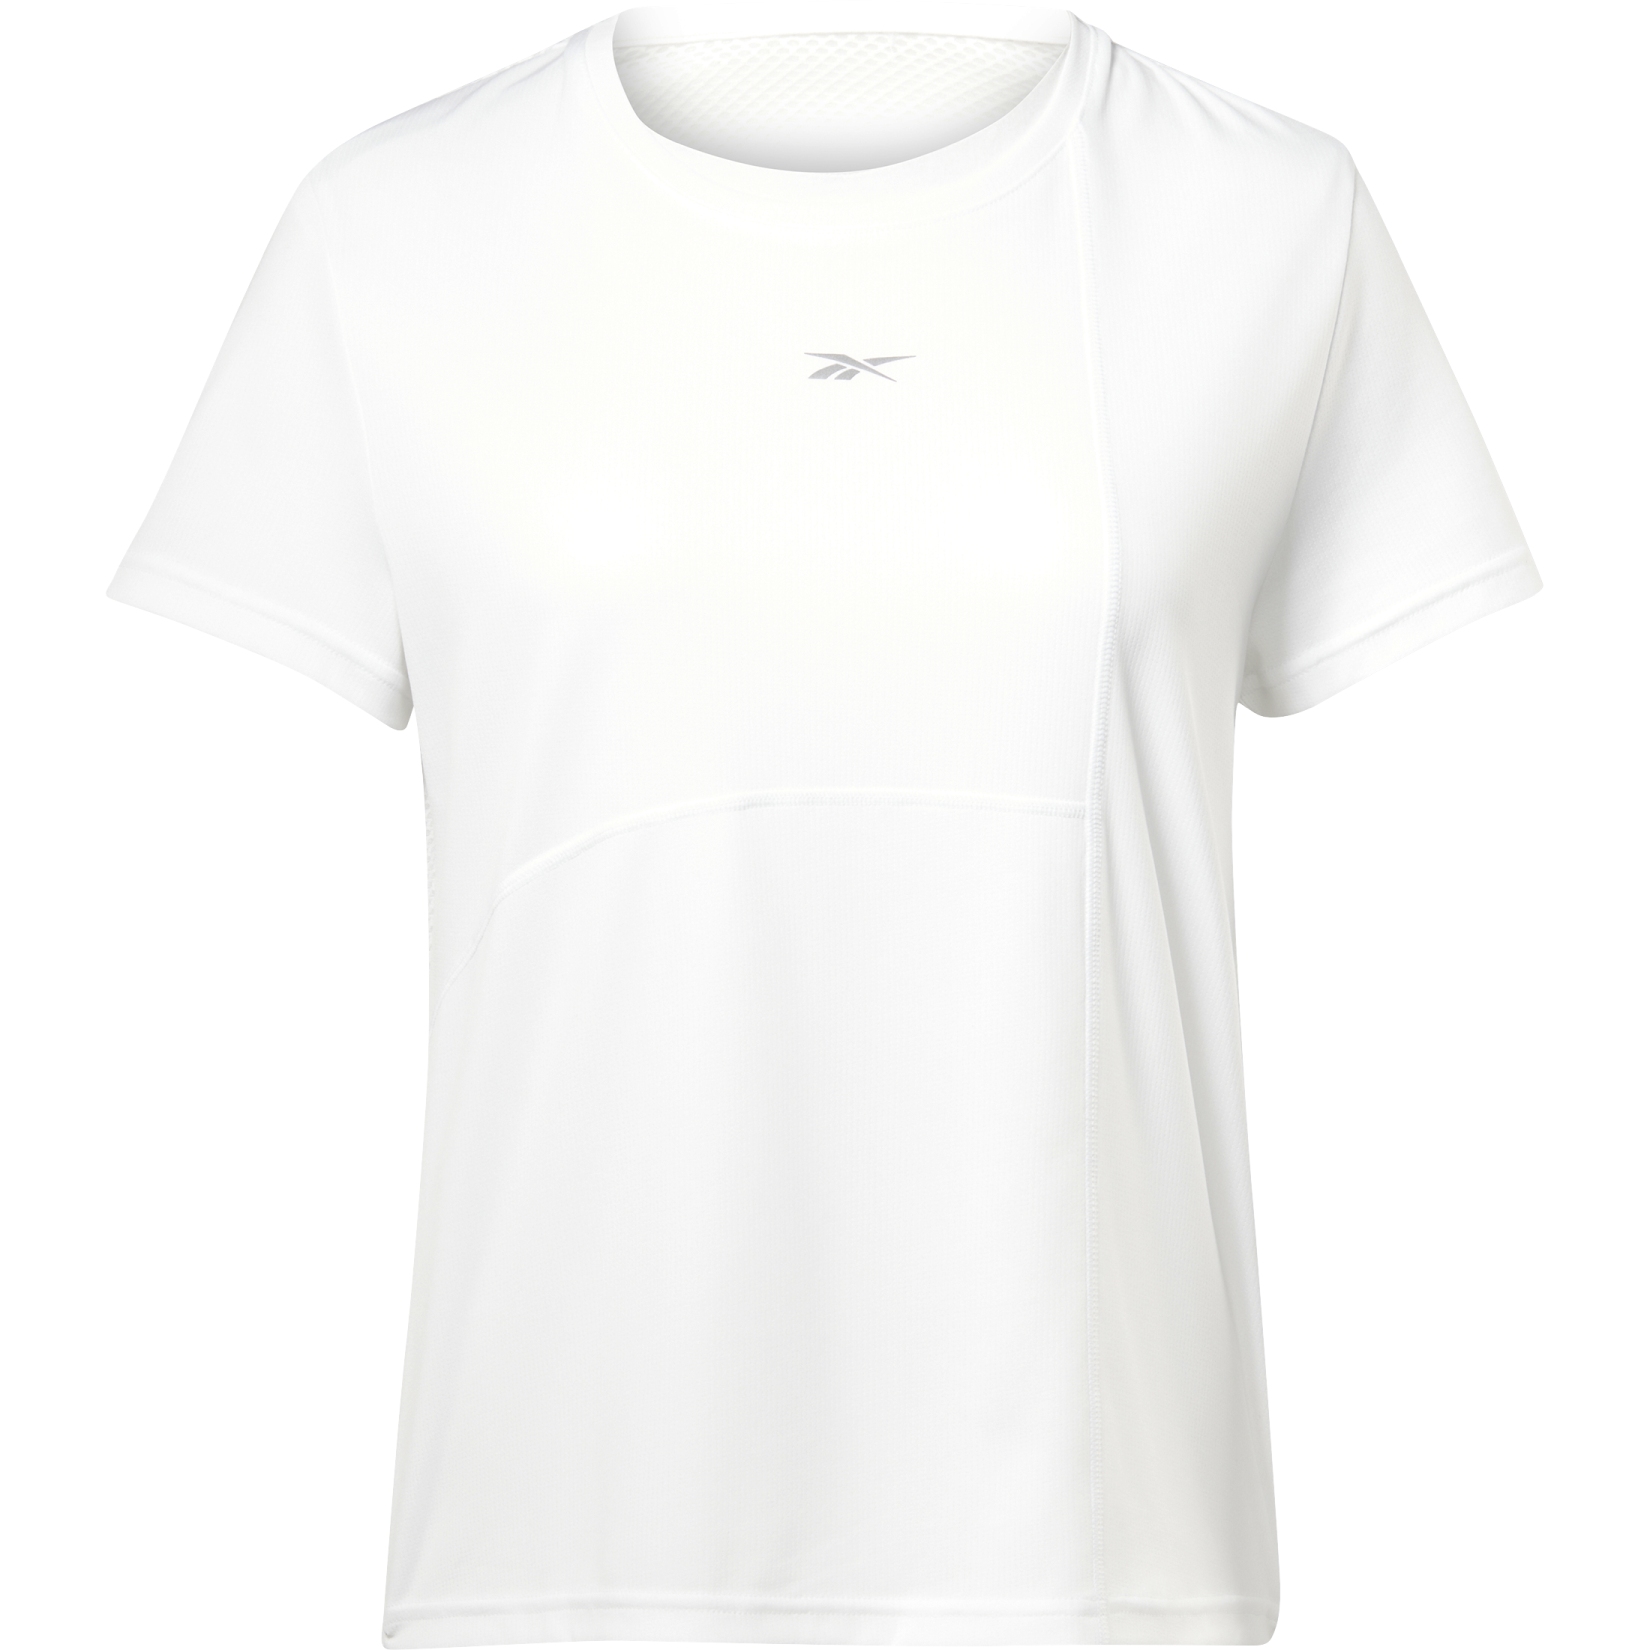 Foto de Reebok Camiseta Mujer - Running Speedwick - blanco